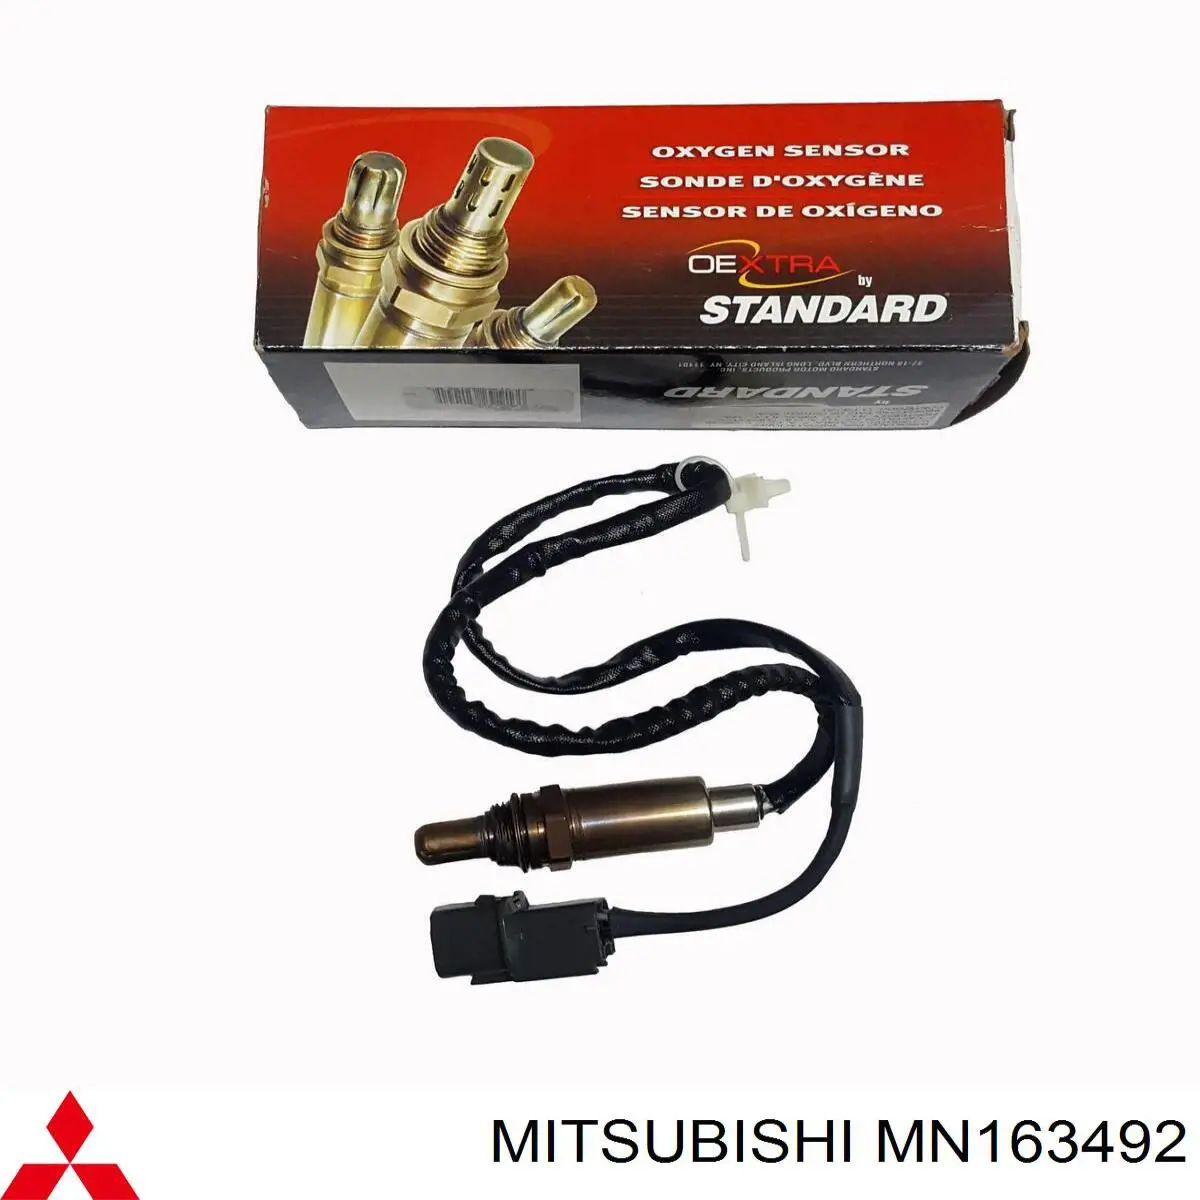 MN163492 Mitsubishi